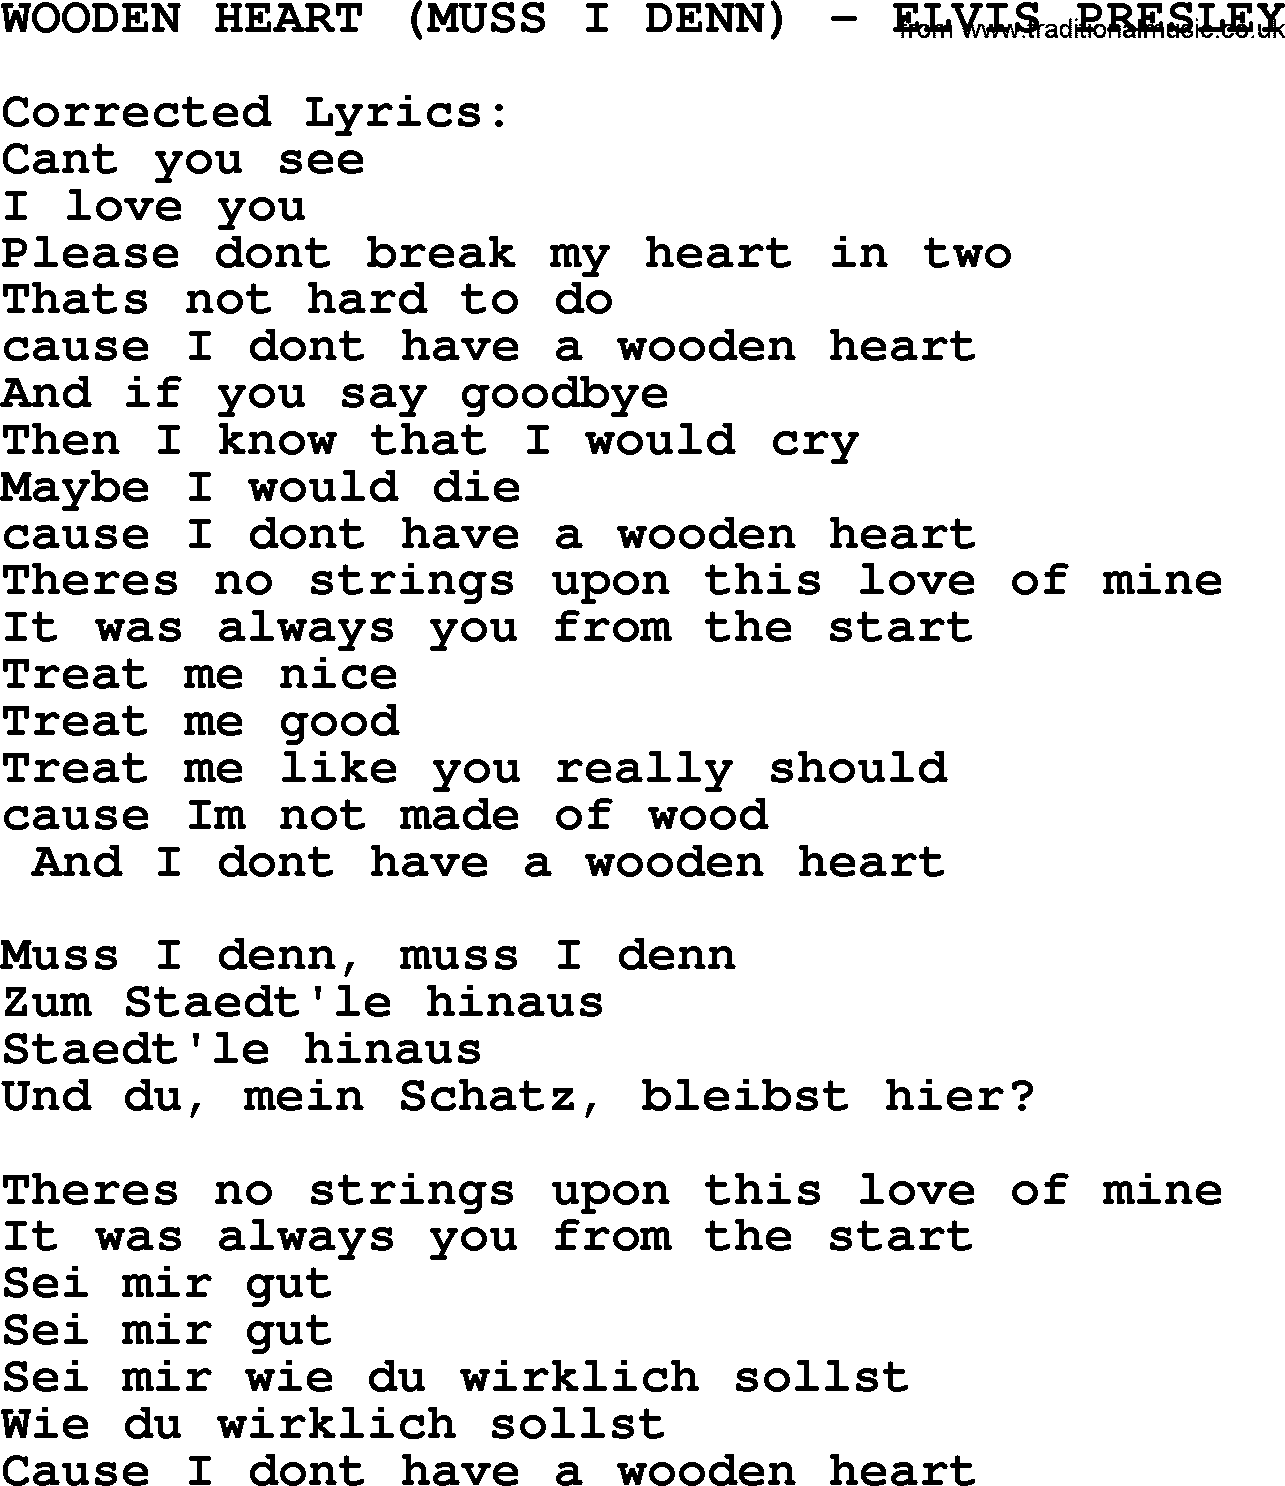 Elvis Presley song: Wooden Heart (Muss I Denn)-Elvis Presley-.txt lyrics and chords